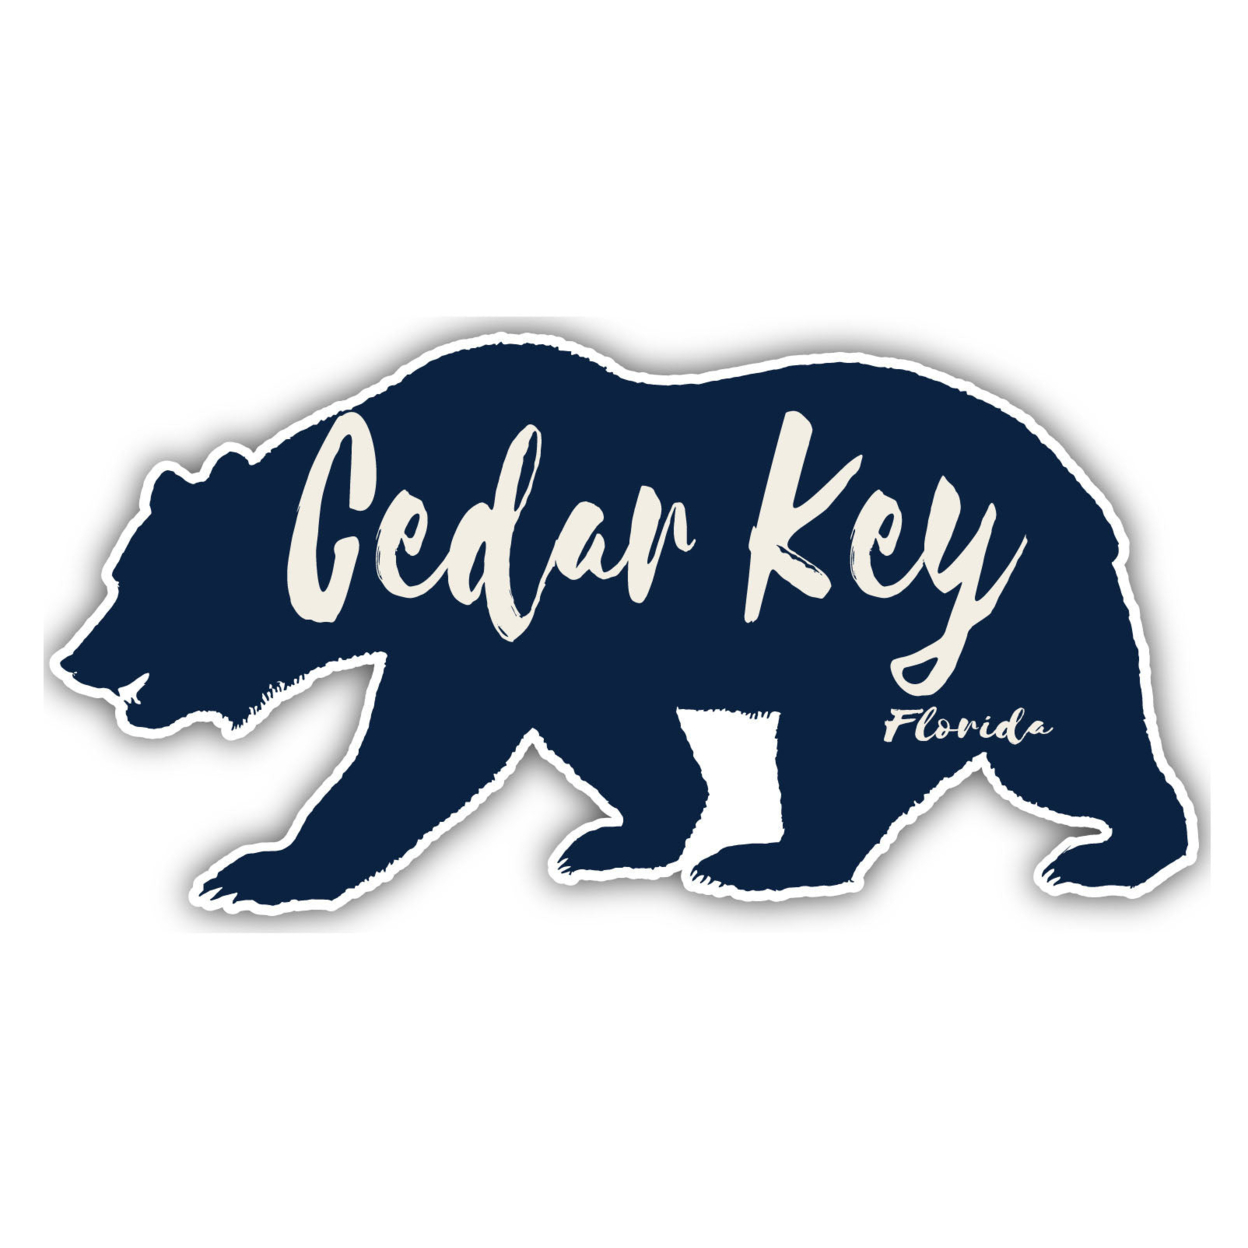 Cedar Key Florida Souvenir Decorative Stickers (Choose Theme And Size) - 4-Pack, 12-Inch, Camp Life